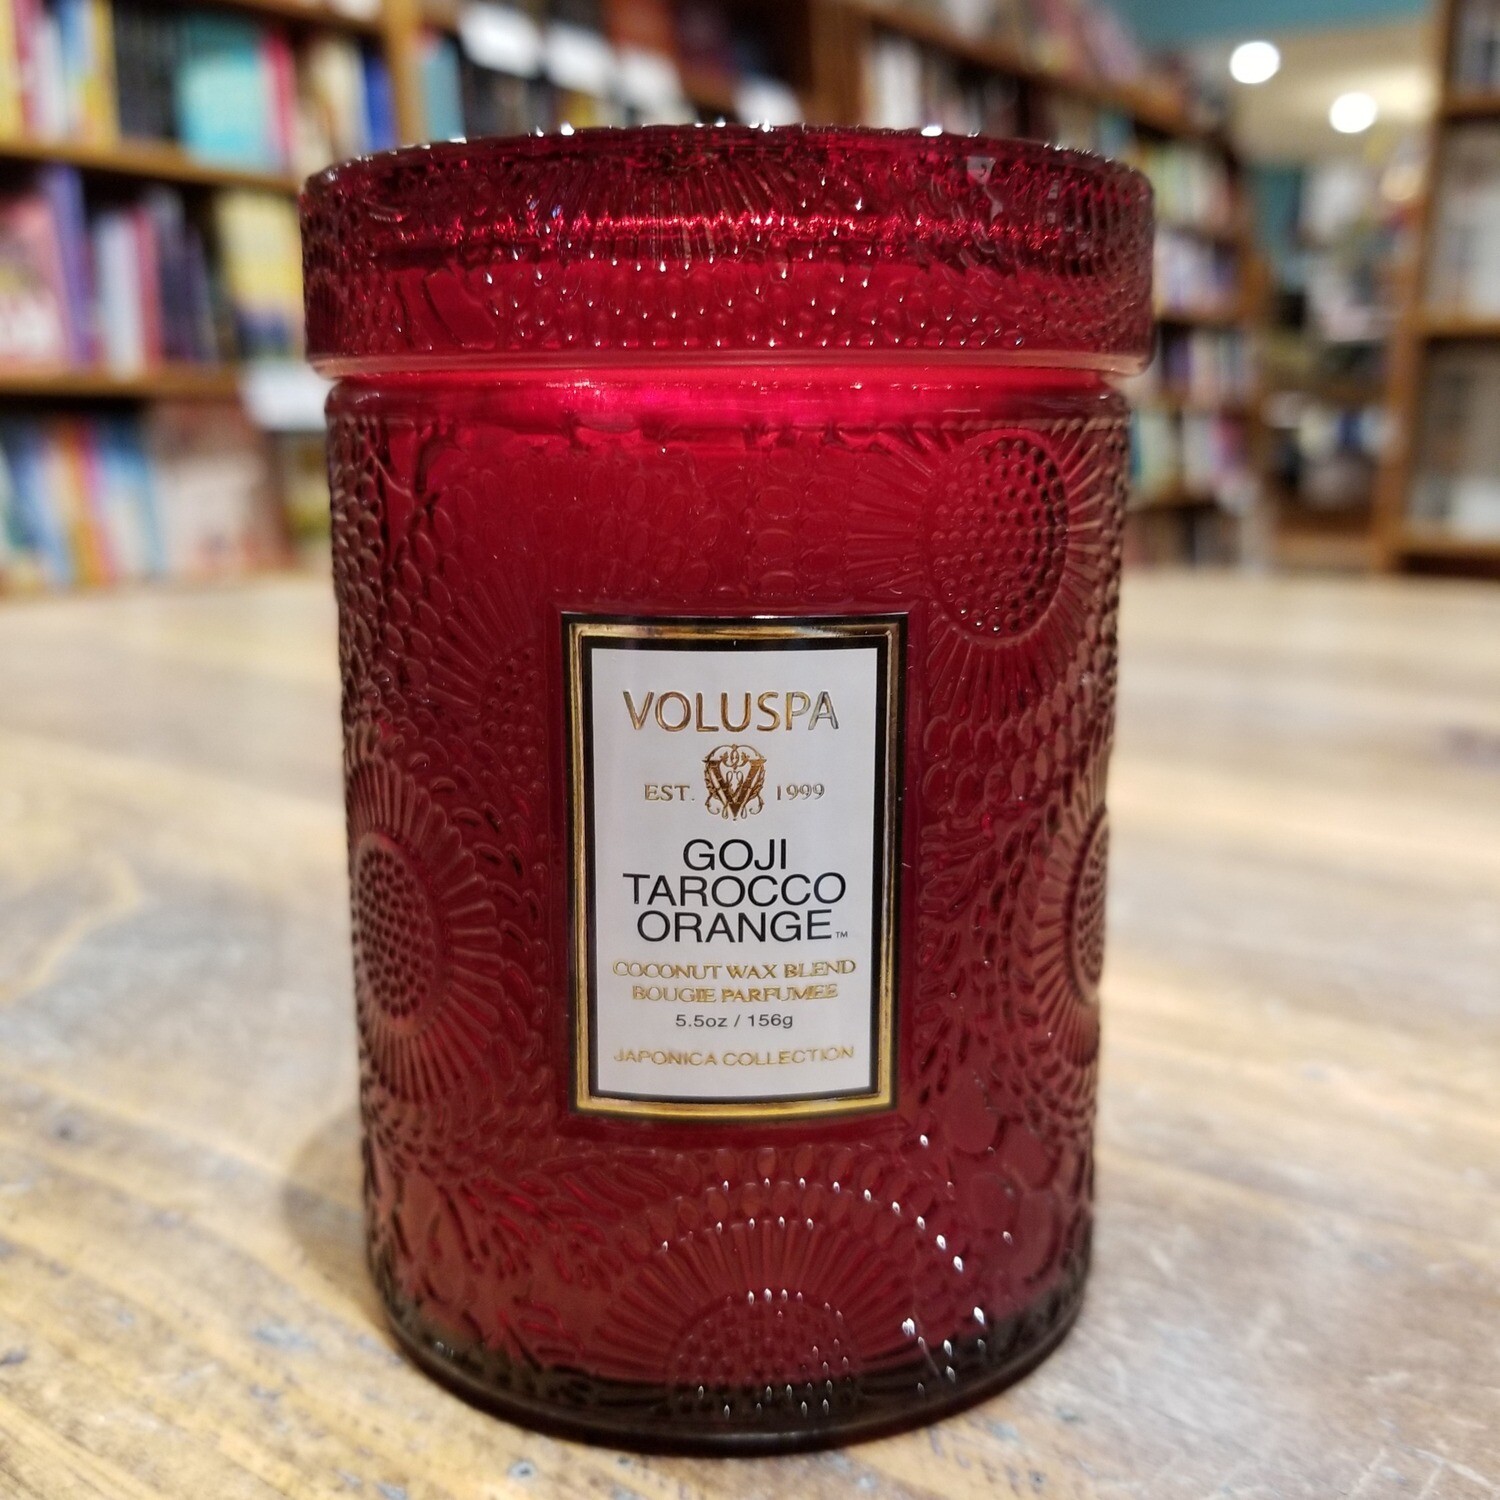 Voluspa Small Jar Candle - Goji Tarocco Orange